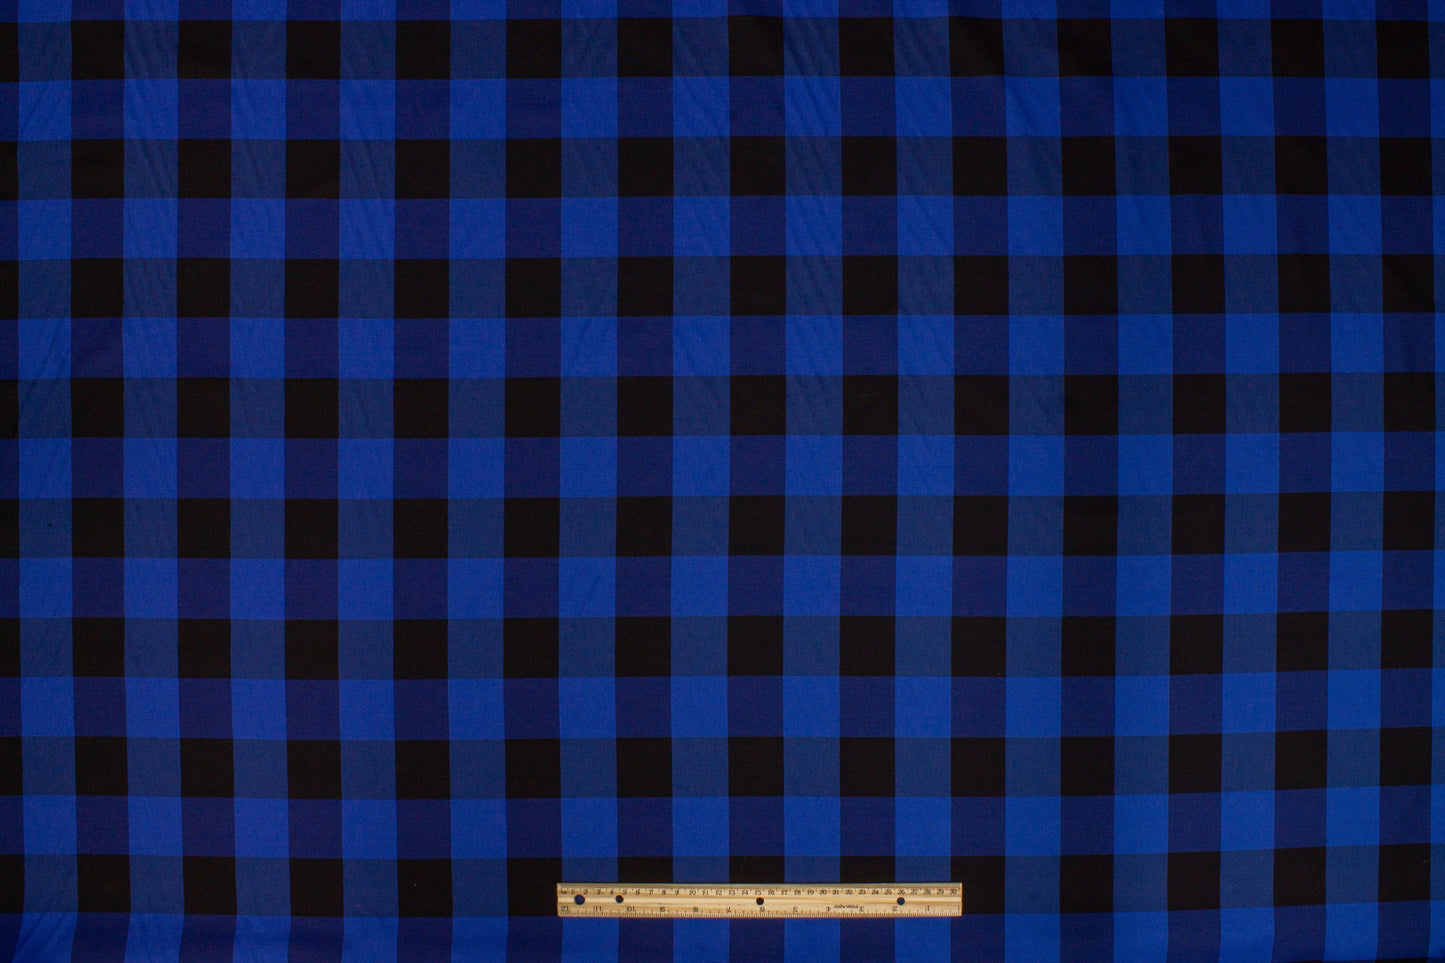 Buffalo Plaid Silk and Cotton Twill - Royal Blue and Black - Prime Fabrics